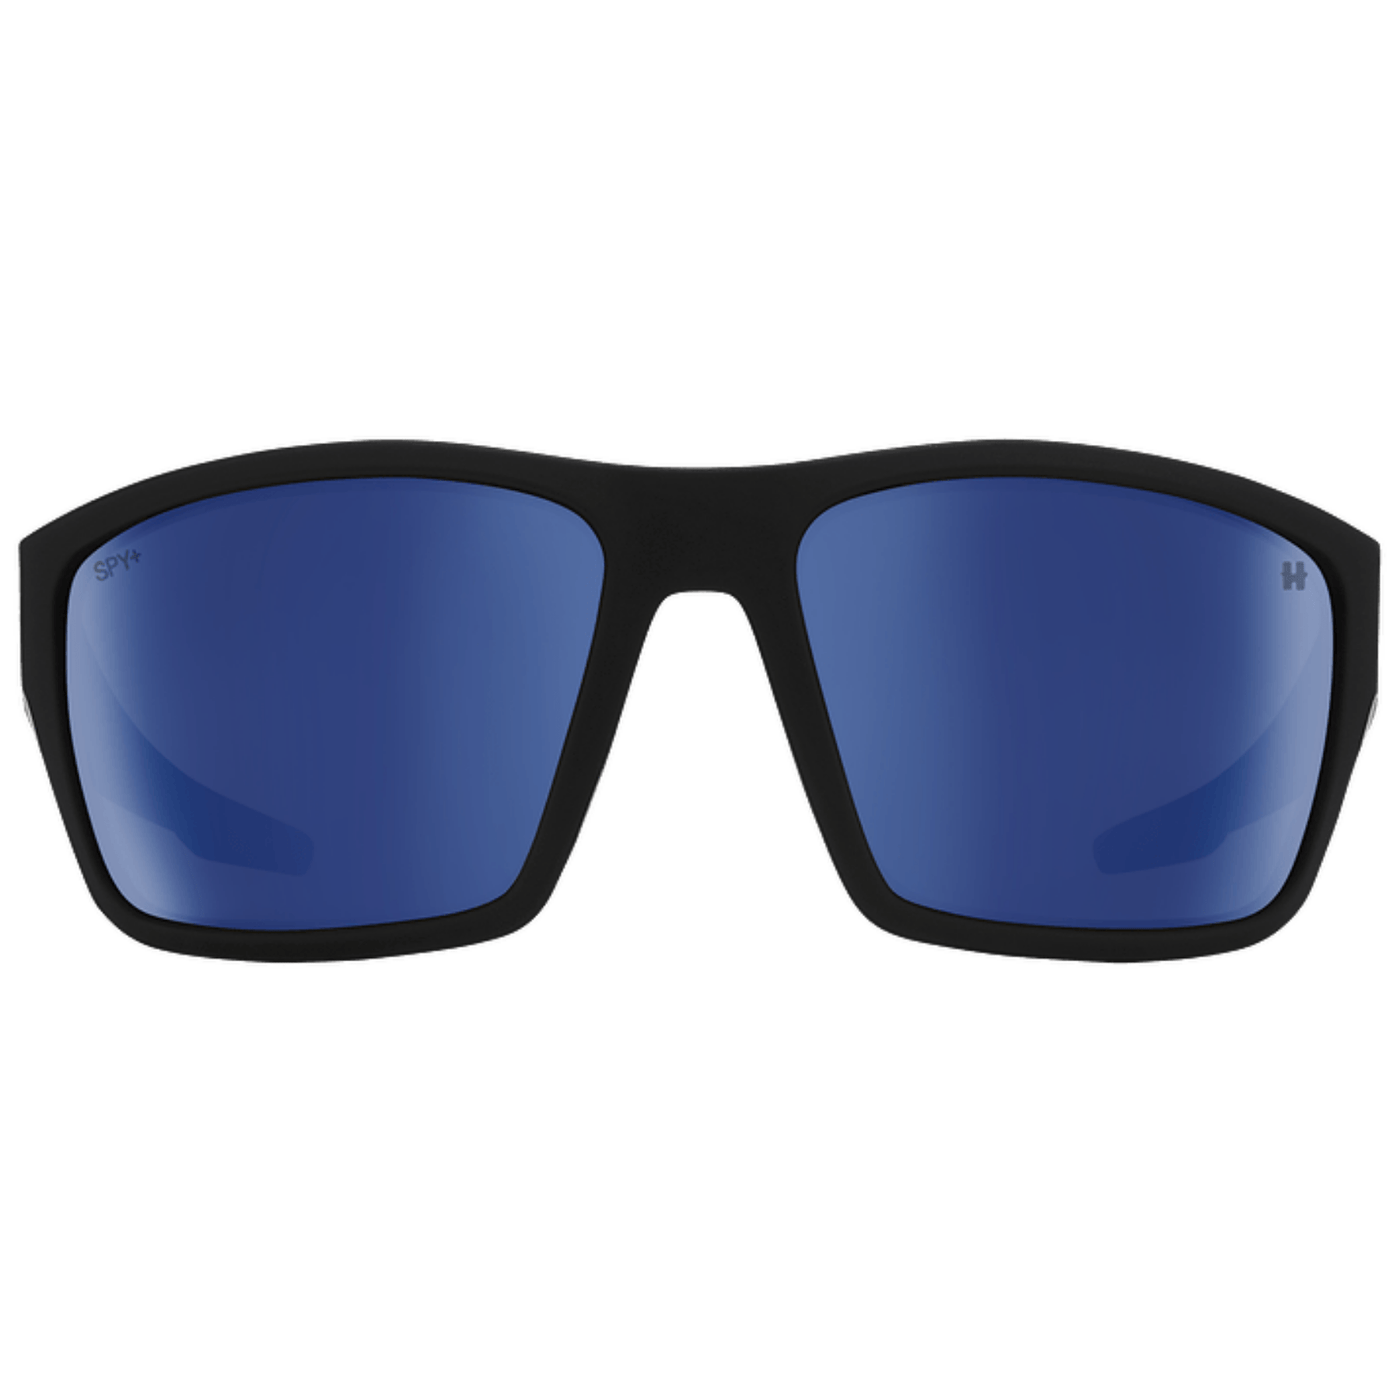 SPY DIRTY MO TECH Sunglasses - Blue 8Lines Shop - Fast Shipping